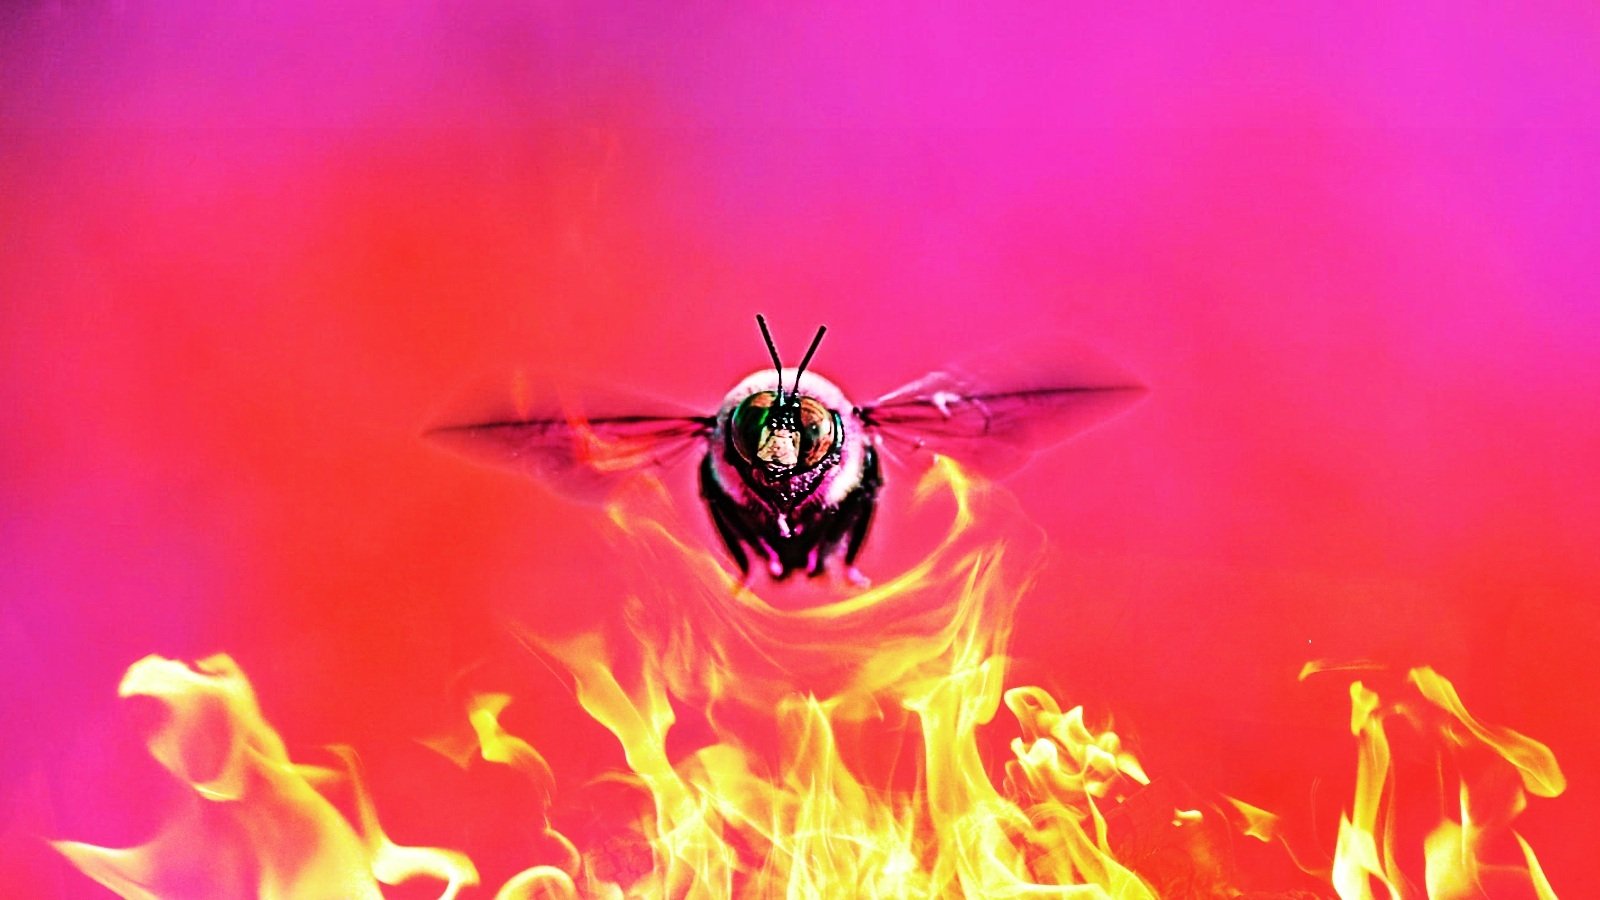 Bumblebee over fire